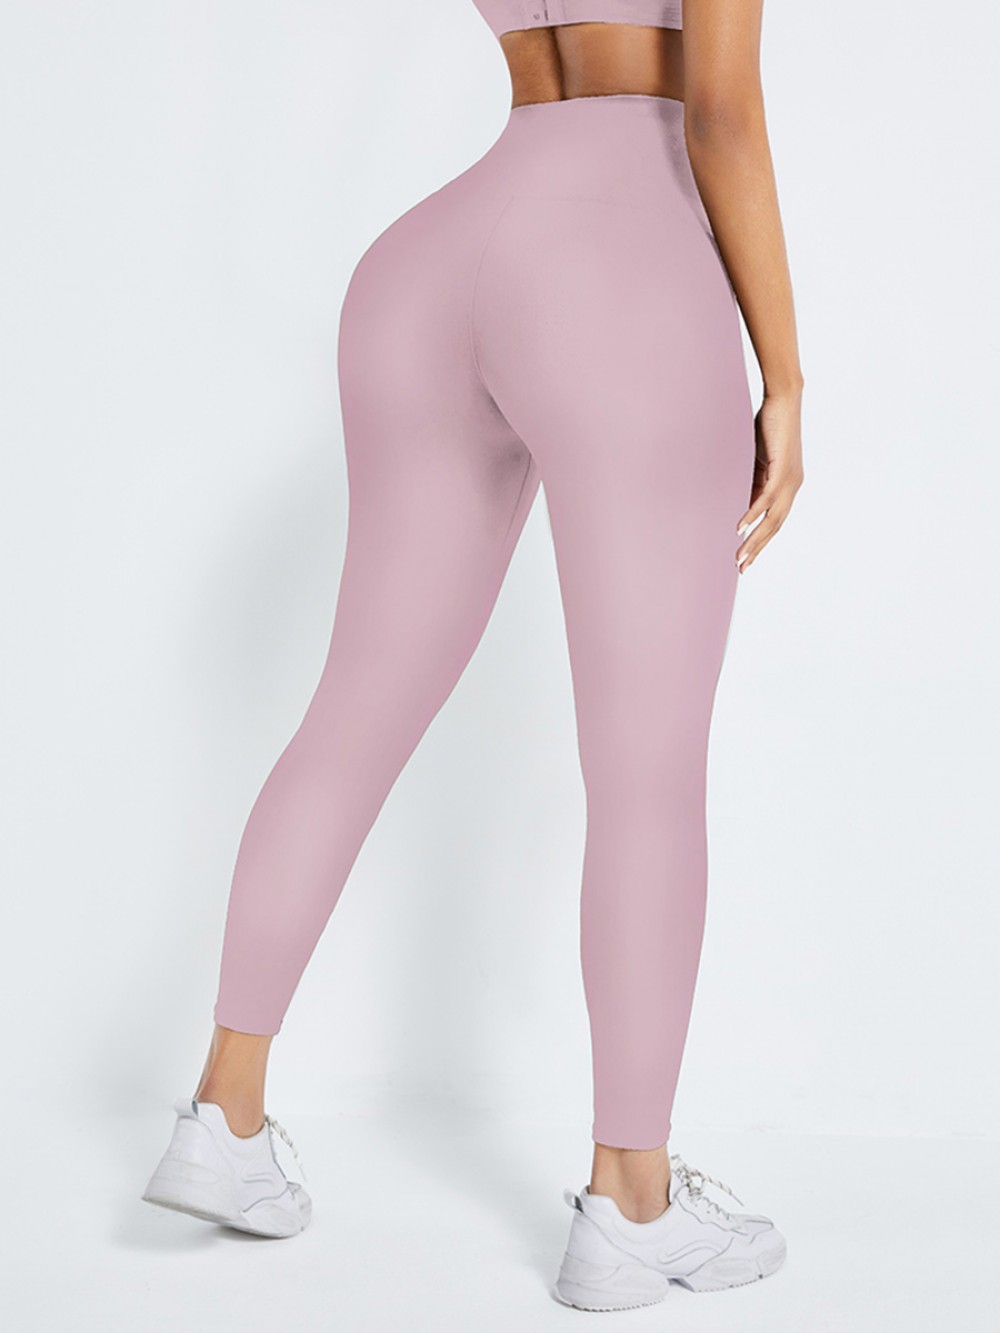 Light Pink 2-In-1 Shapewear Leggings High Waist Hidden Curves